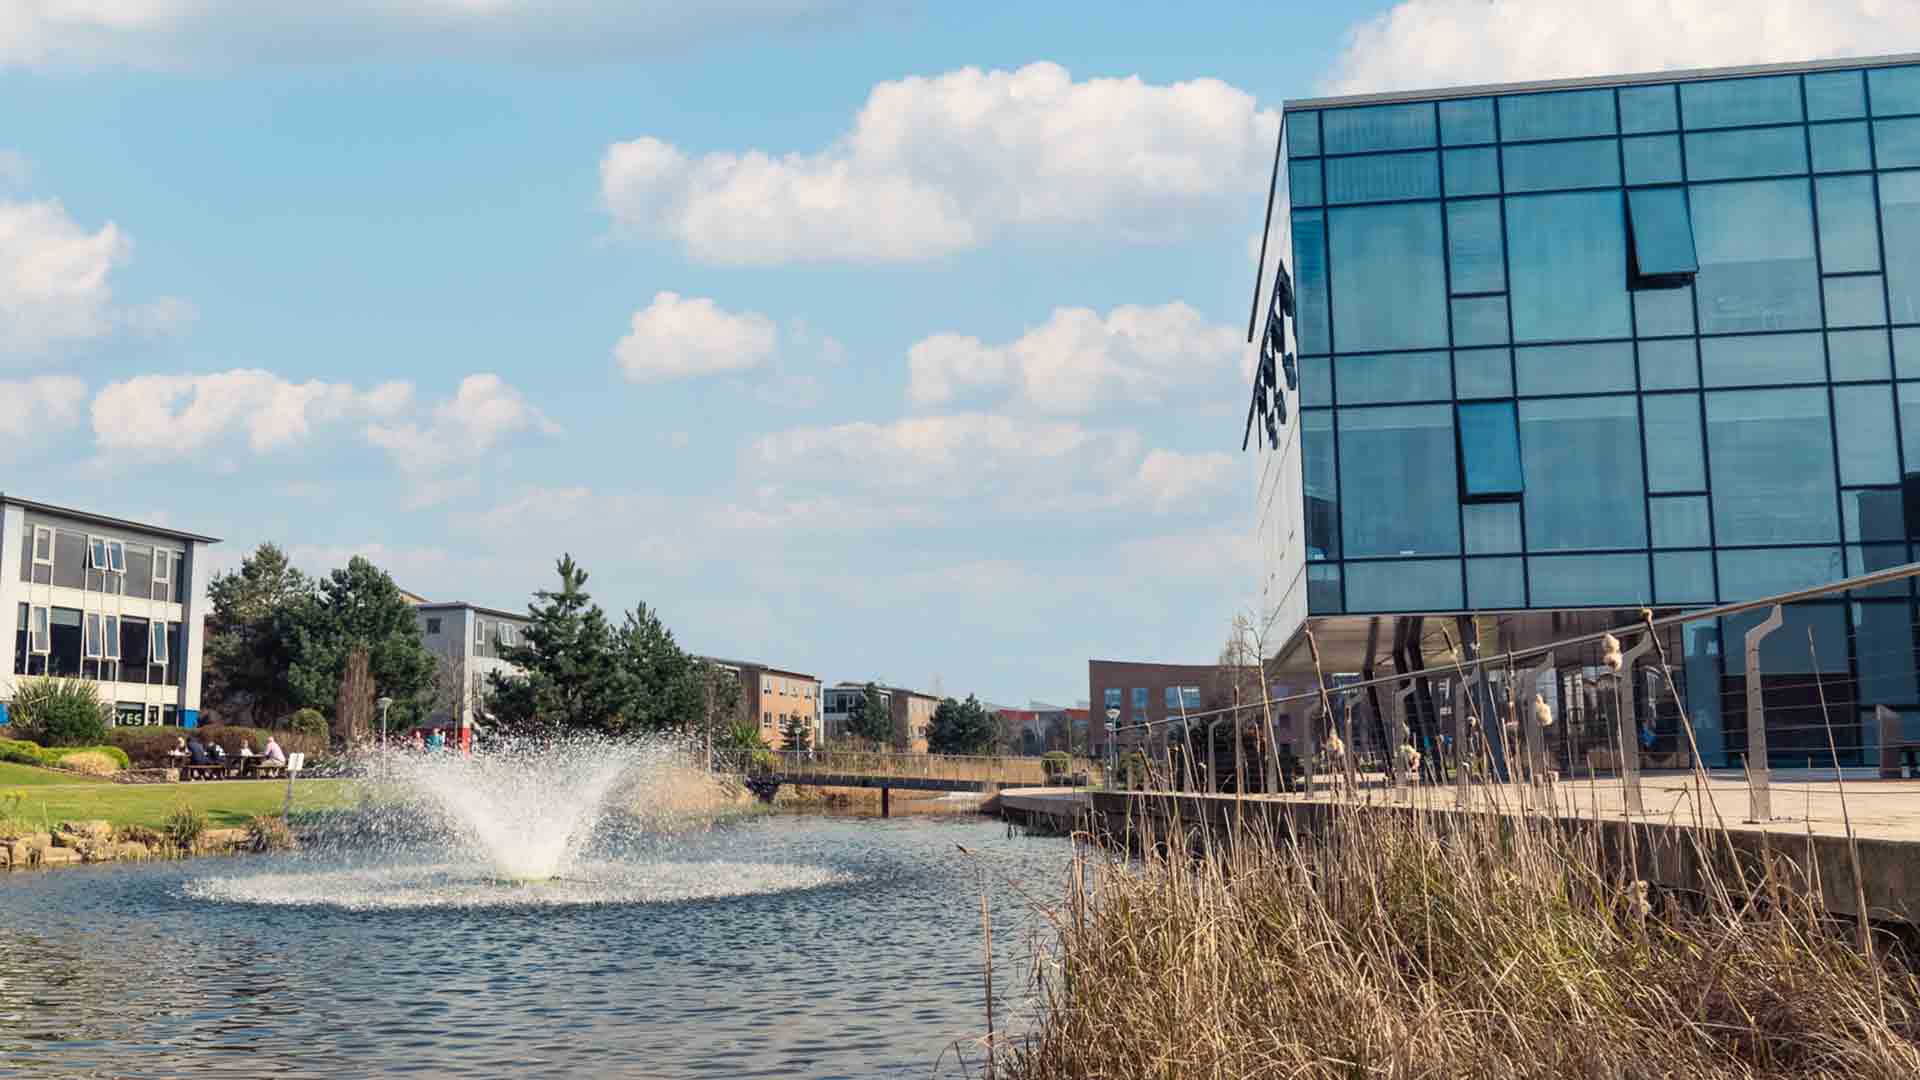 Image of part of campus. Photo showing Creative Edge, Lake and accommodation blocks